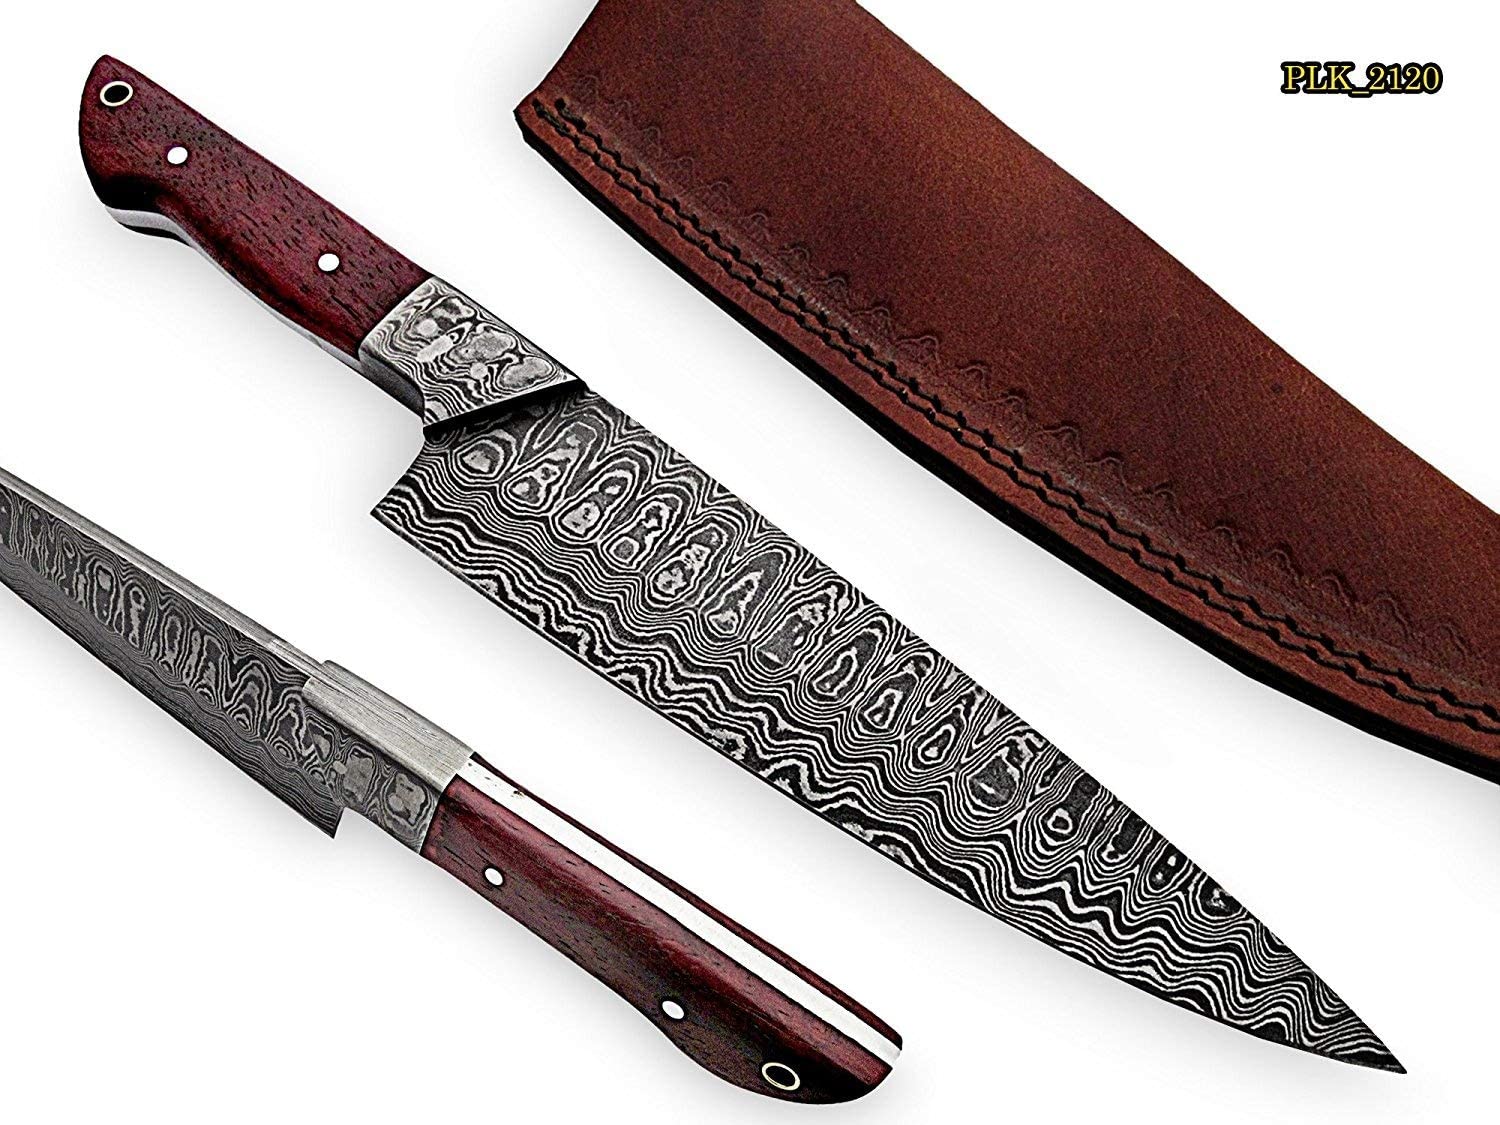 Rk 2120 Style Damascus Steel Chef Knife Exotic Wood Handle With Damascus Steel Bolster Walmart Com Walmart Com